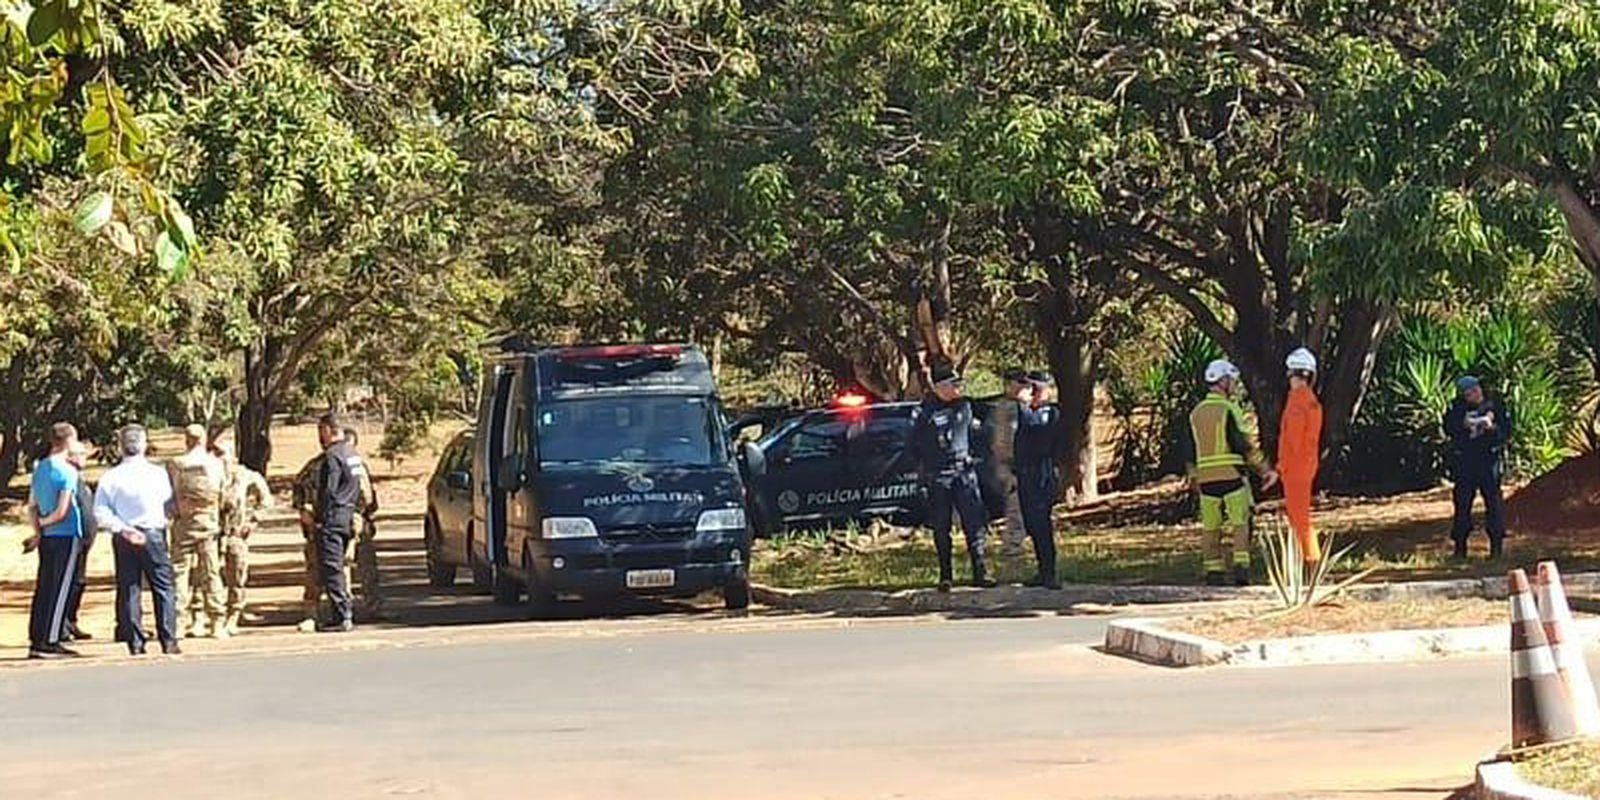 Embaixada da Rússia em Brasília tem falso alerta de bomba